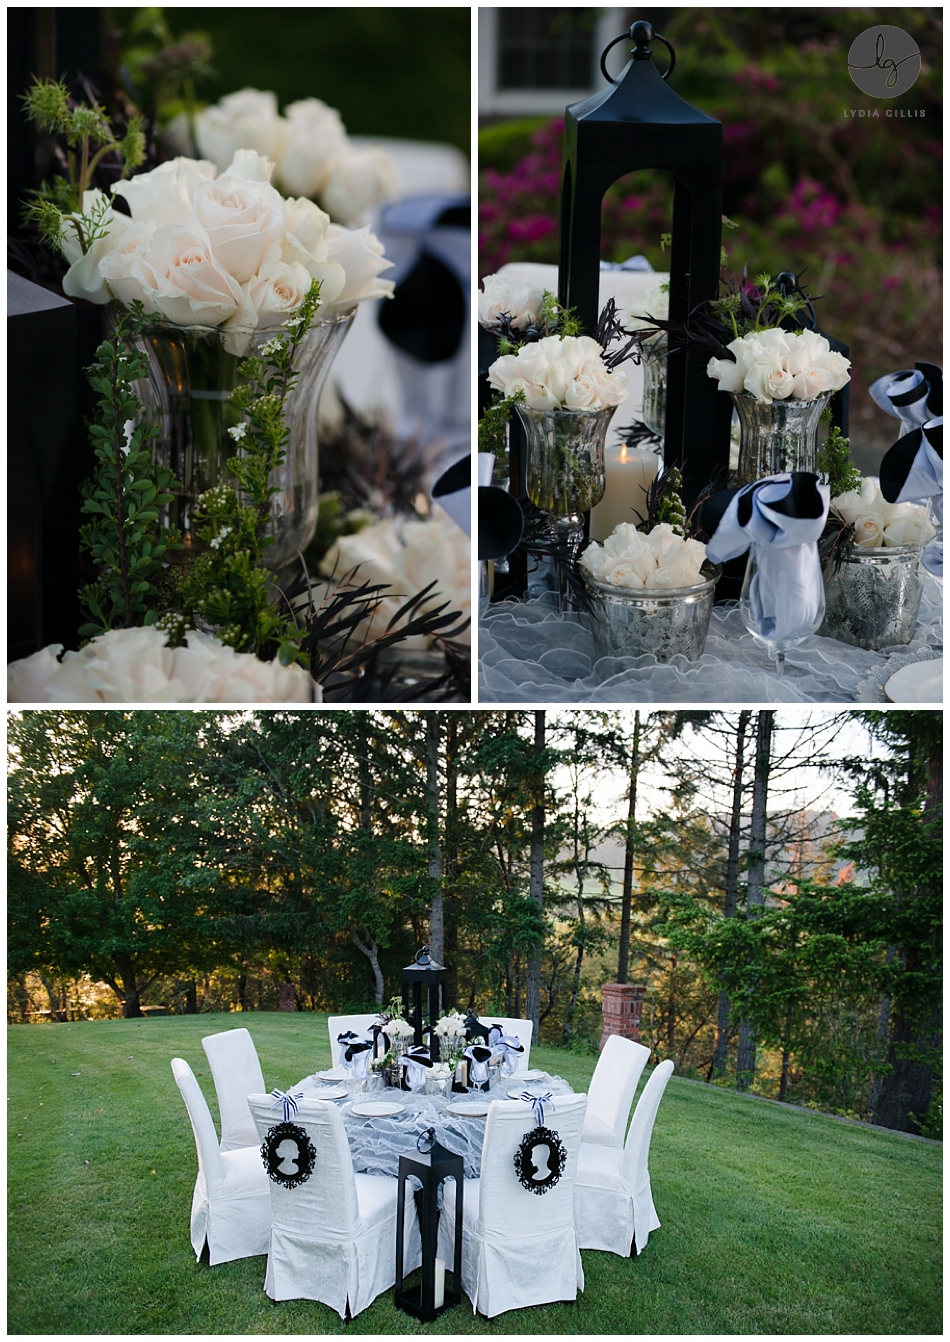 Falk Estate Vineyards Black and White Wedding details